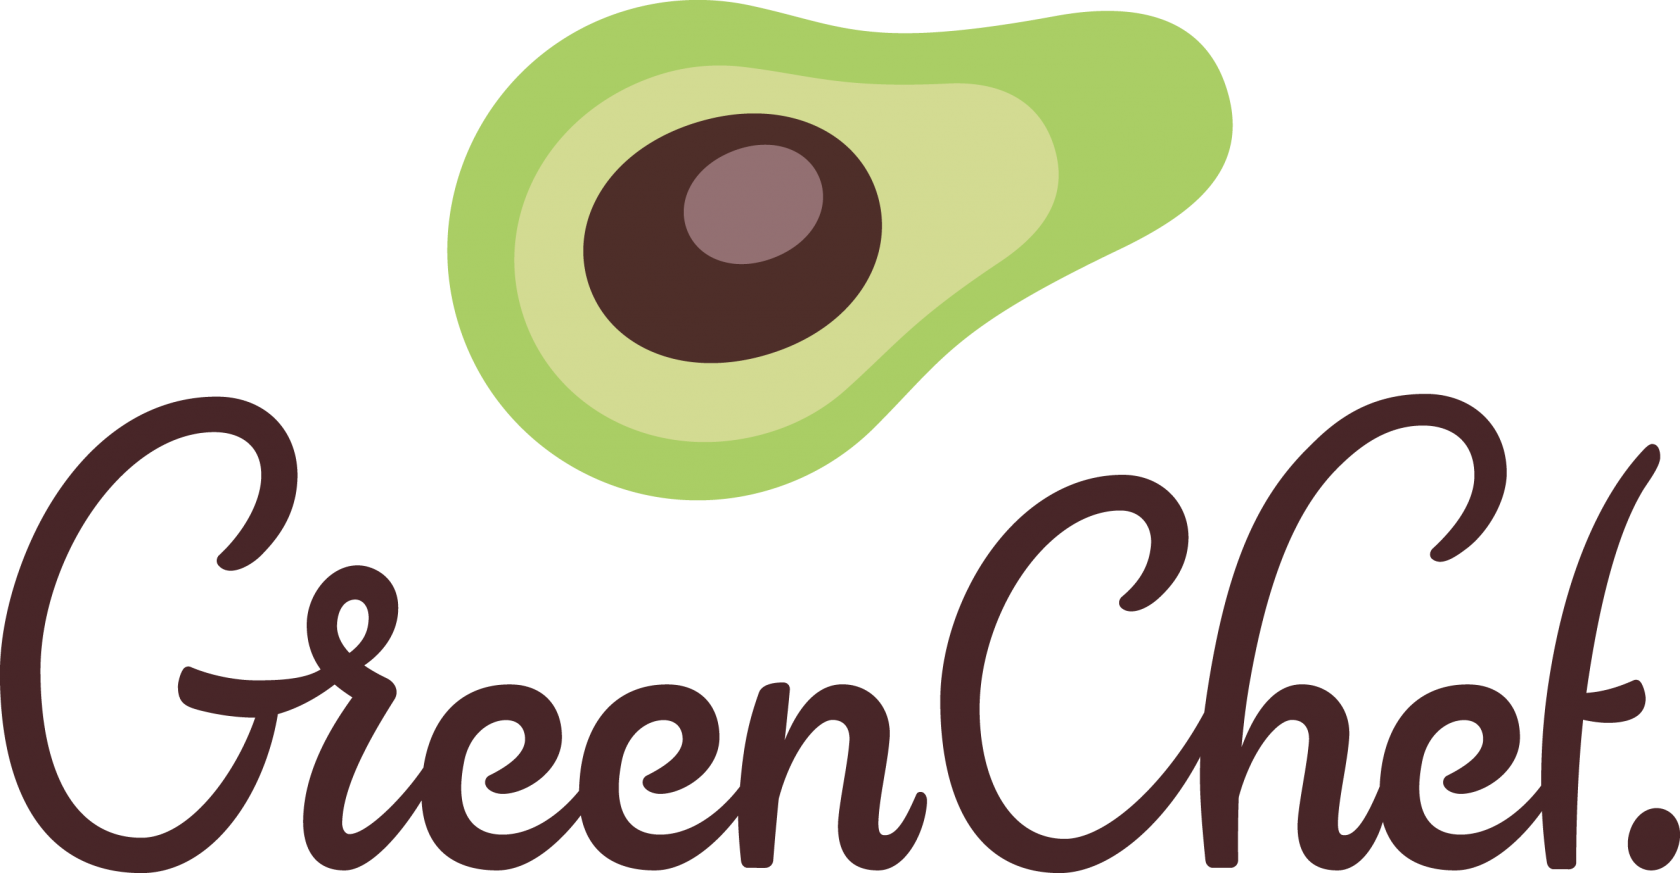 Green Chef - Green Chef (1680x873)